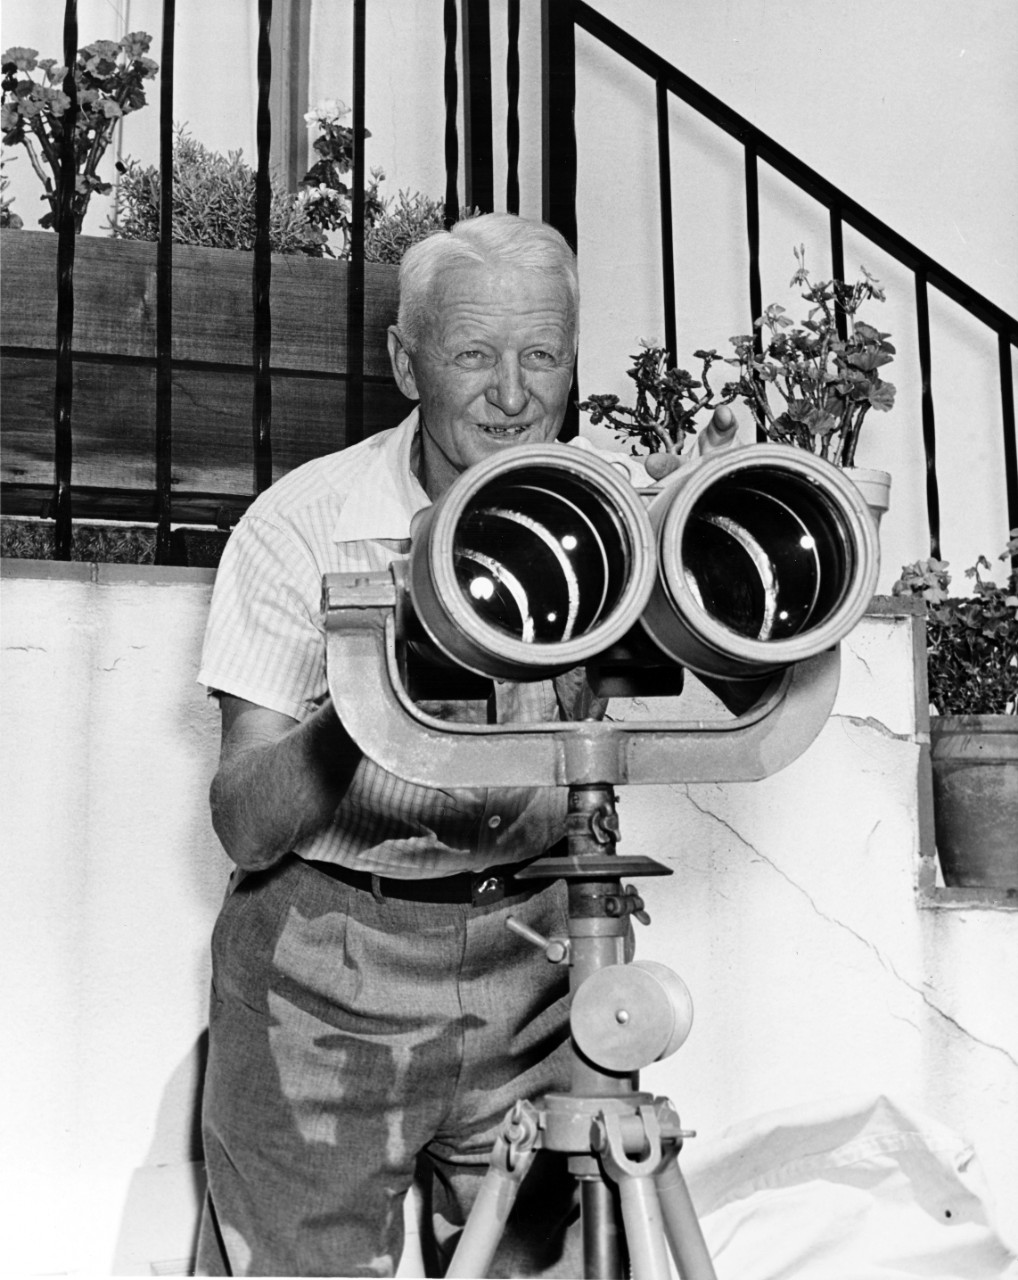 Nimitz with his Binoculars